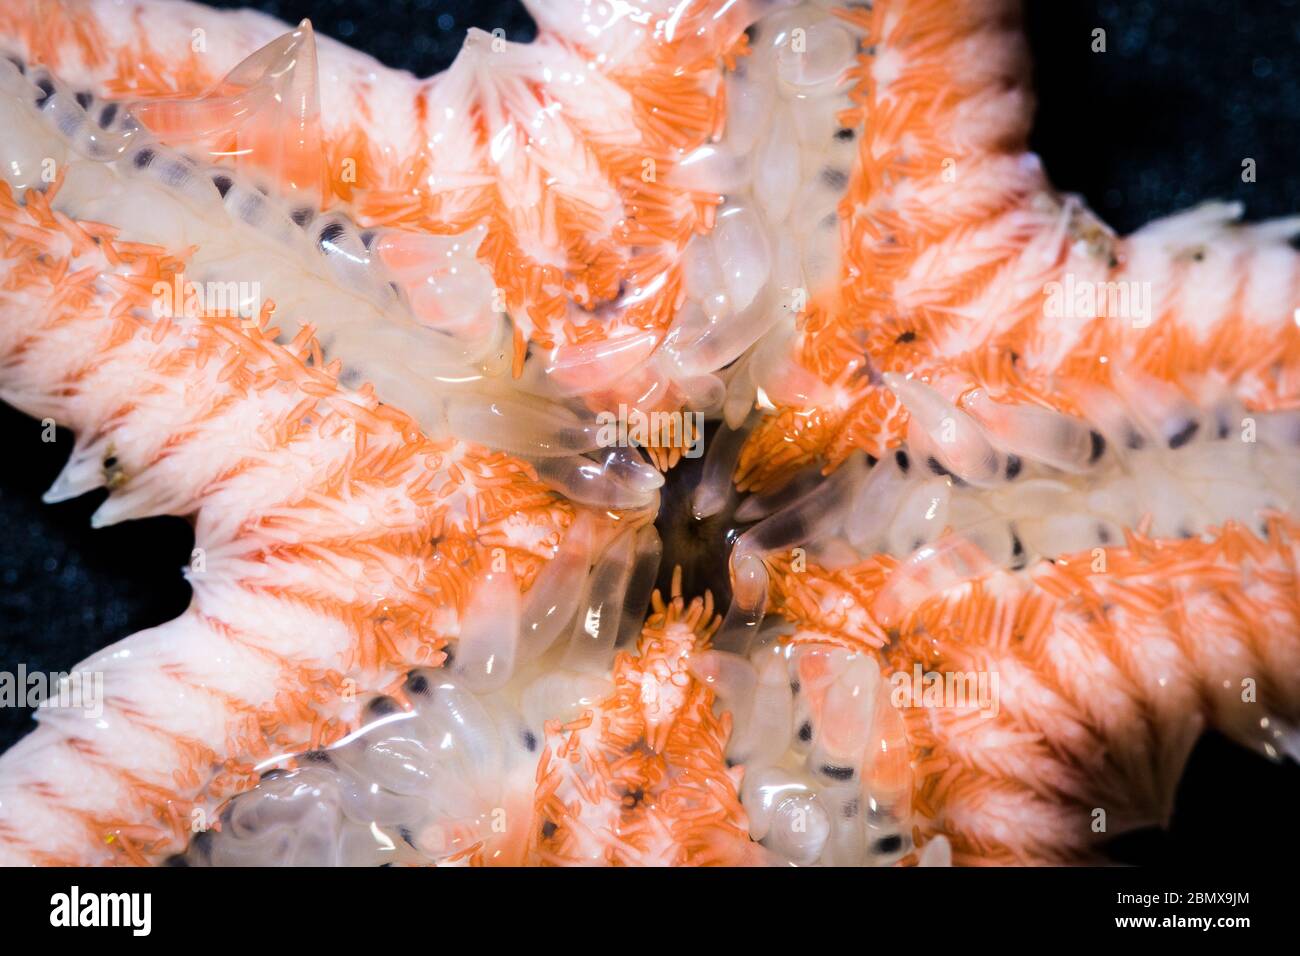 Astropecten orange trim sea star, Astropecten irregularis, is one of many species found on the seafloor off the coast of South Africa, Indian Ocean Stock Photo